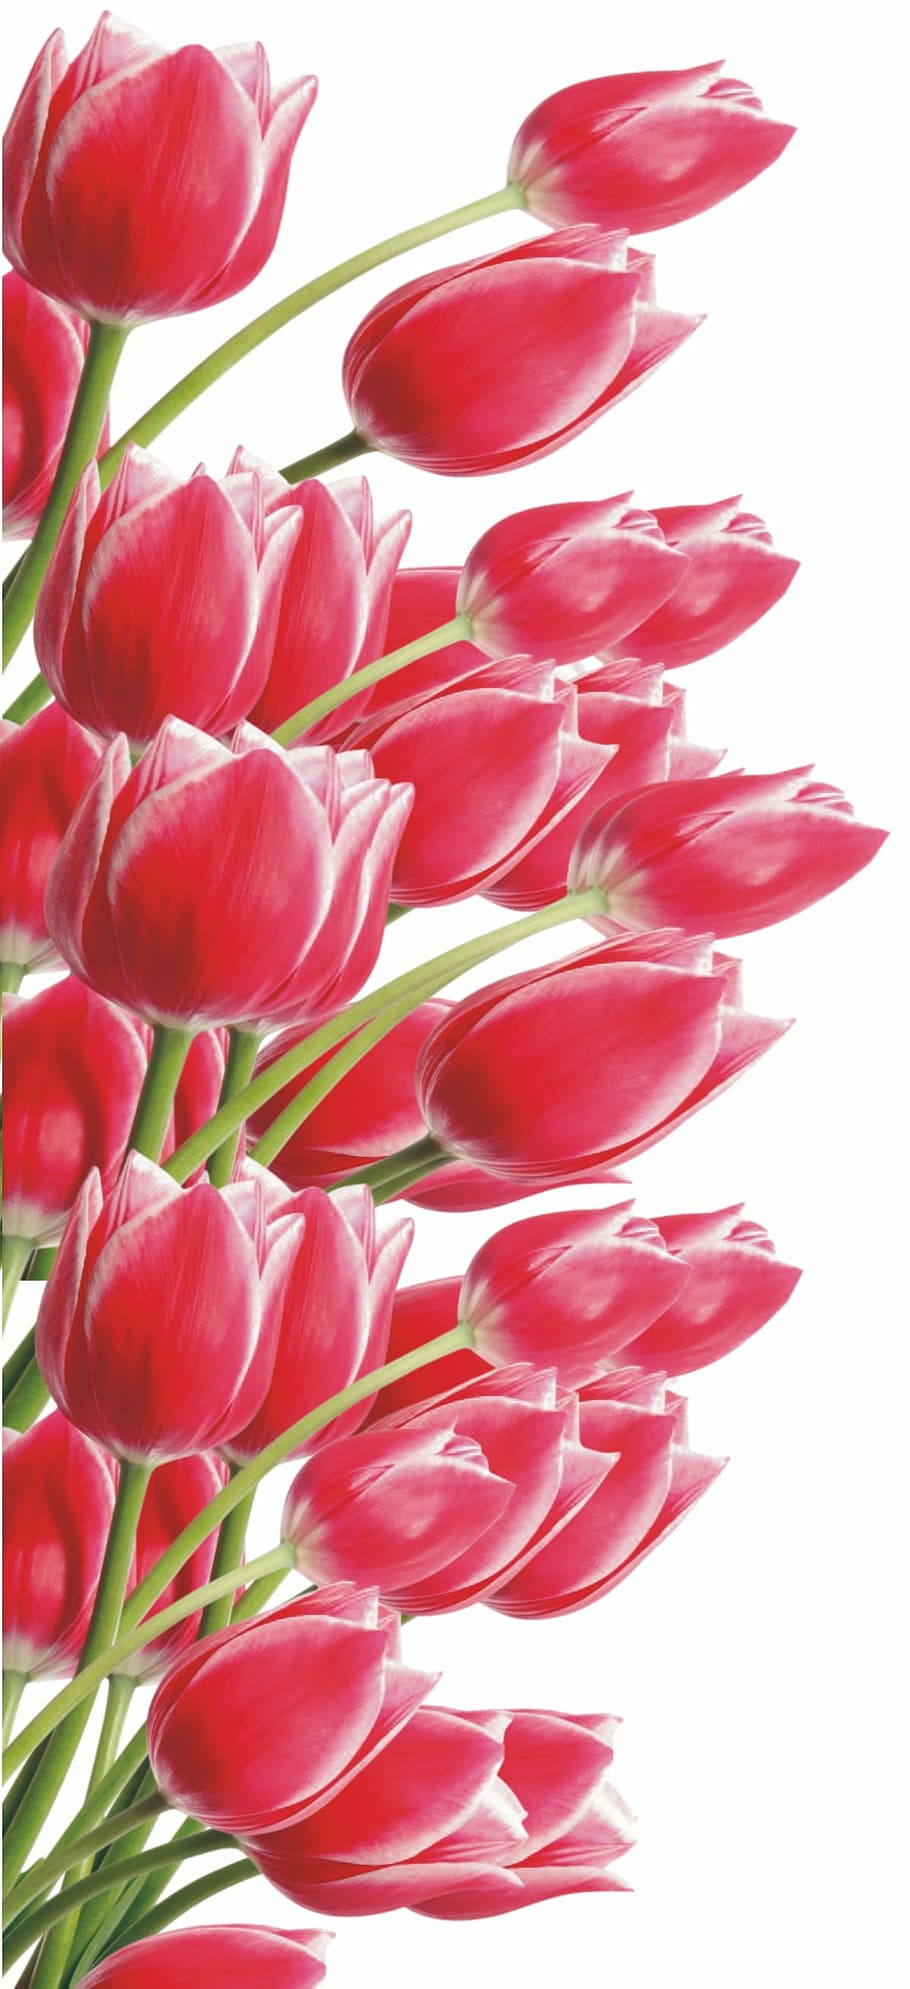 pink, petaled flowers, animated, illustration, lily, flower, red, bouquet, celebration, elegant